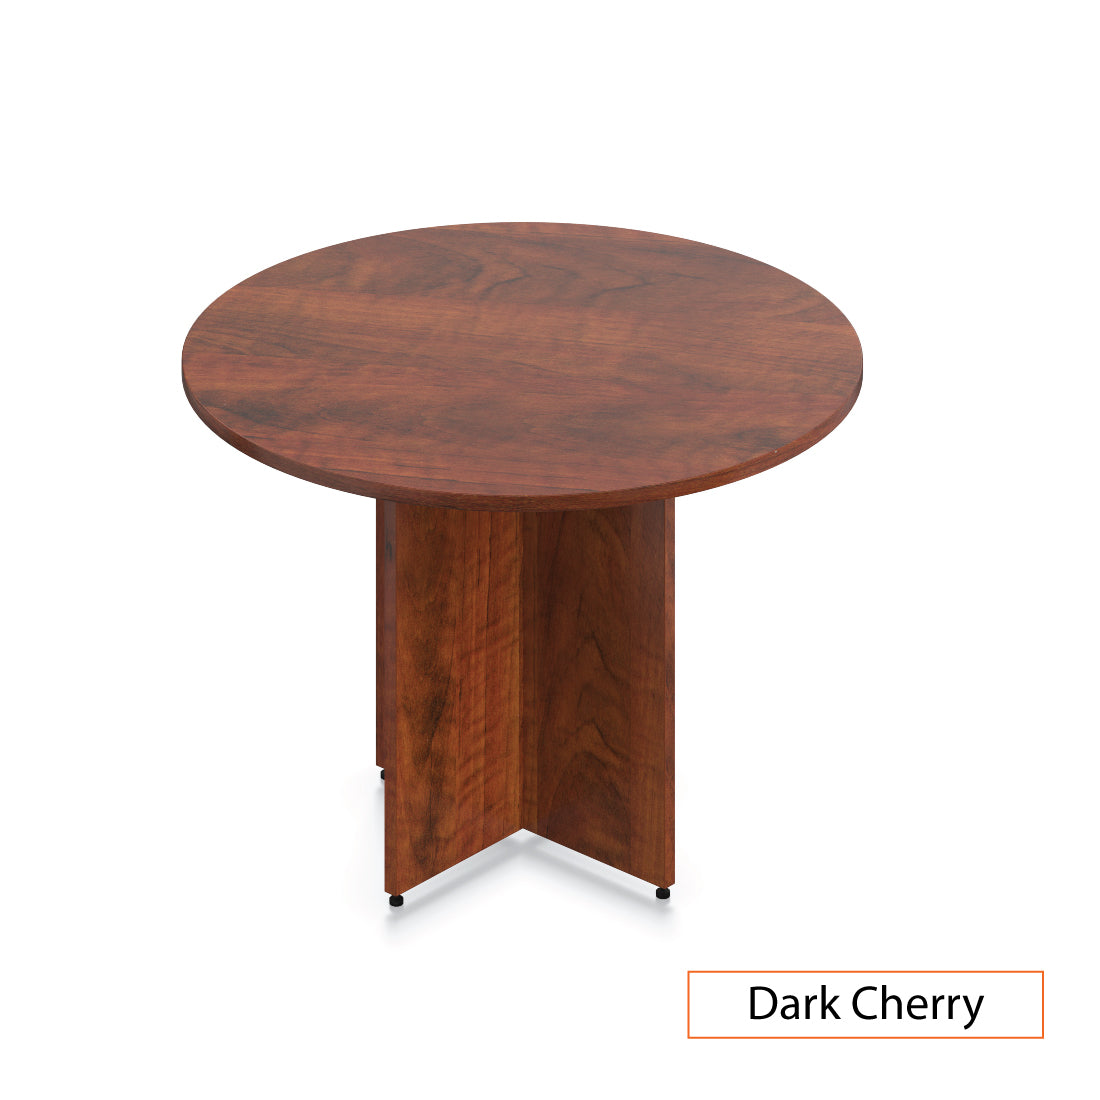 42" Round Table/Cross Base with 3 Chairs (G10902B) - Kainosbuy.com